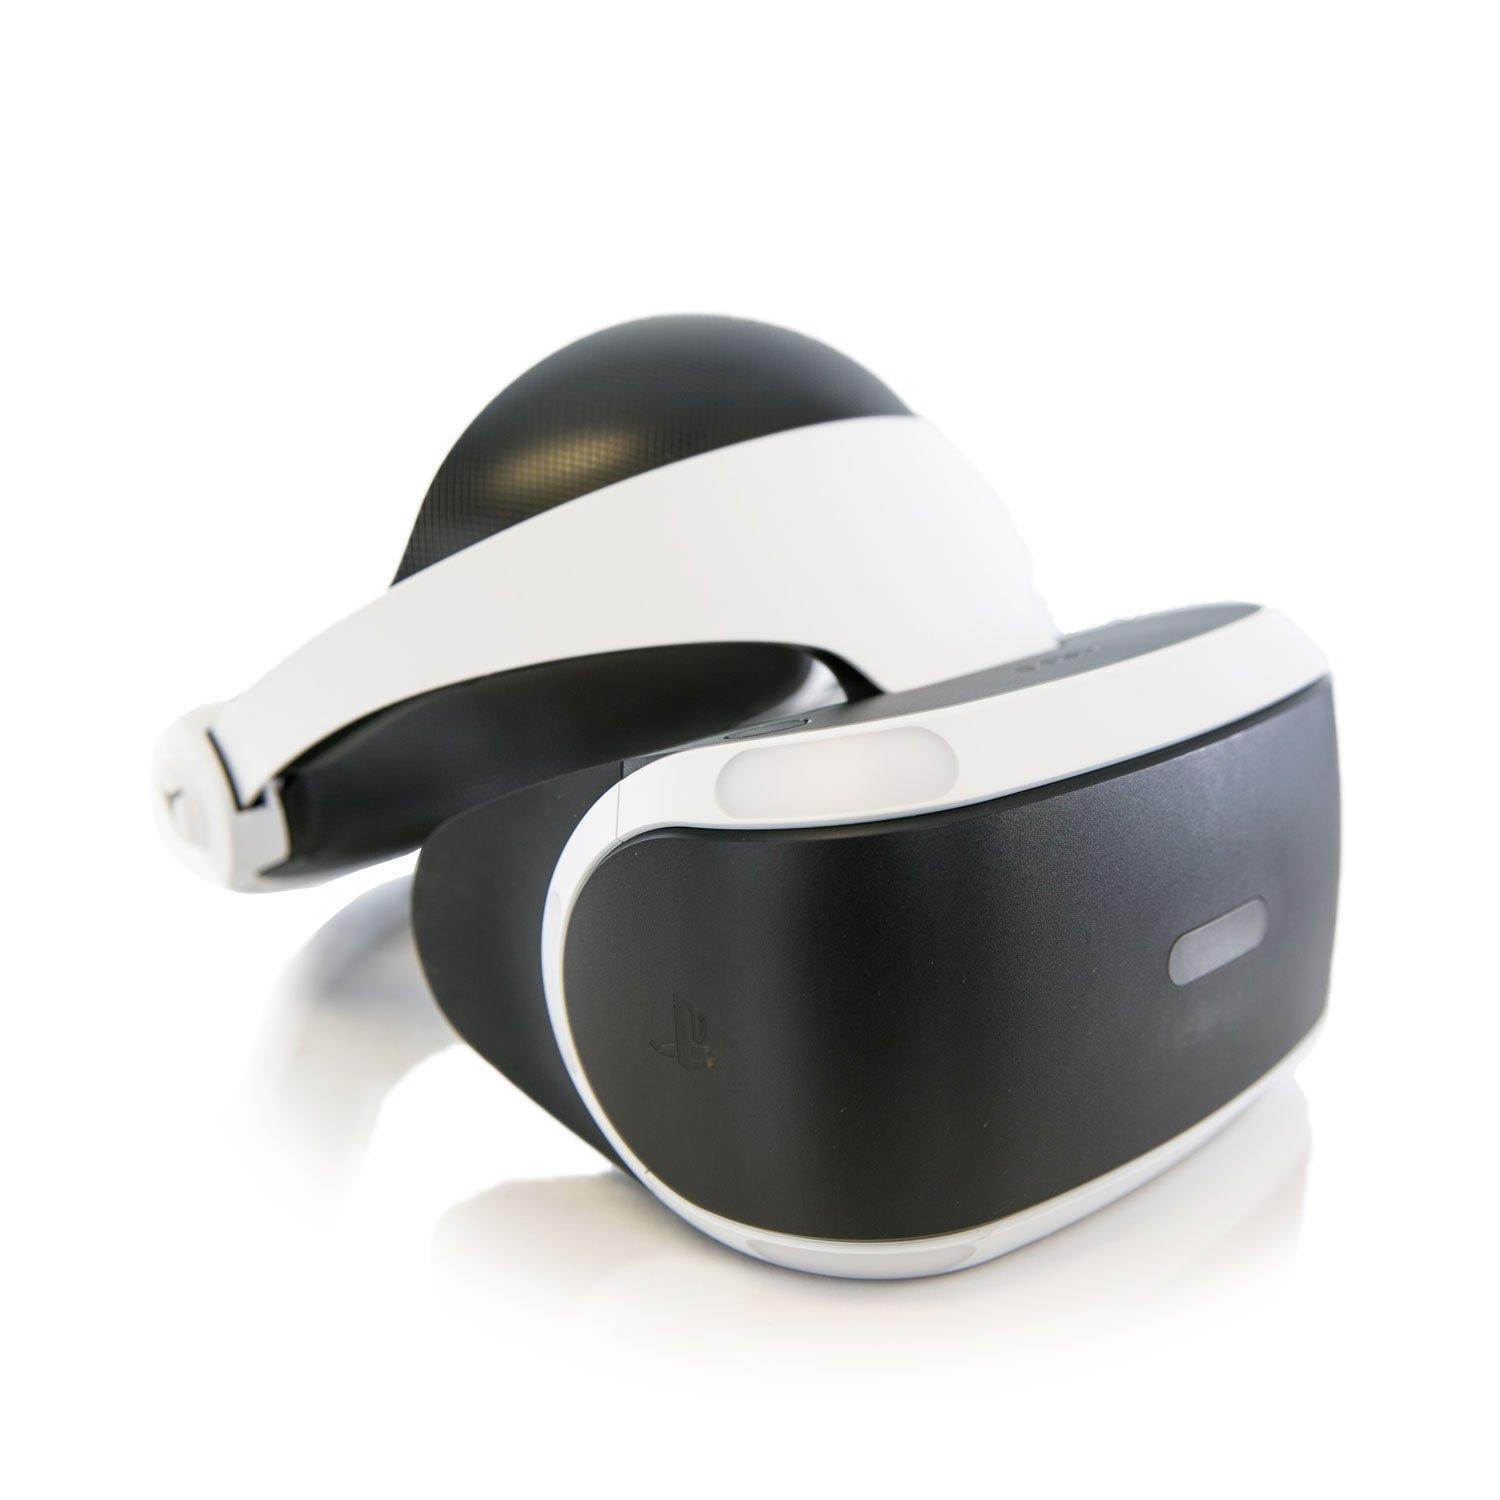 B.C. Automatisering petticoat PlayStation VR HDR Compatible Headset| Premium Refurbished | PlayStation 4  | GameStop